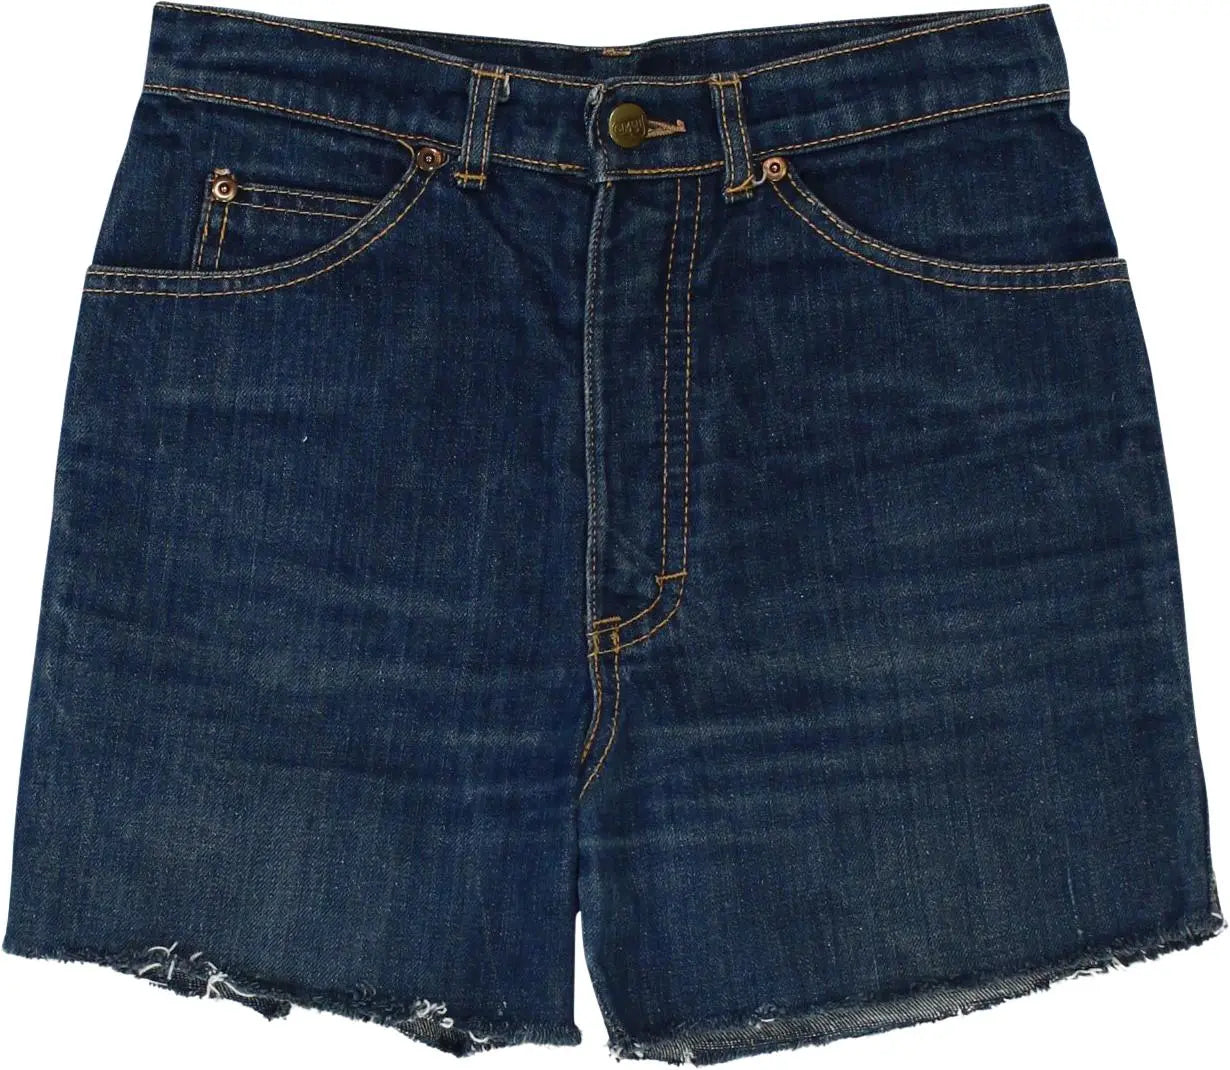 Crash - Blue Denim Shorts- ThriftTale.com - Vintage and second handclothing